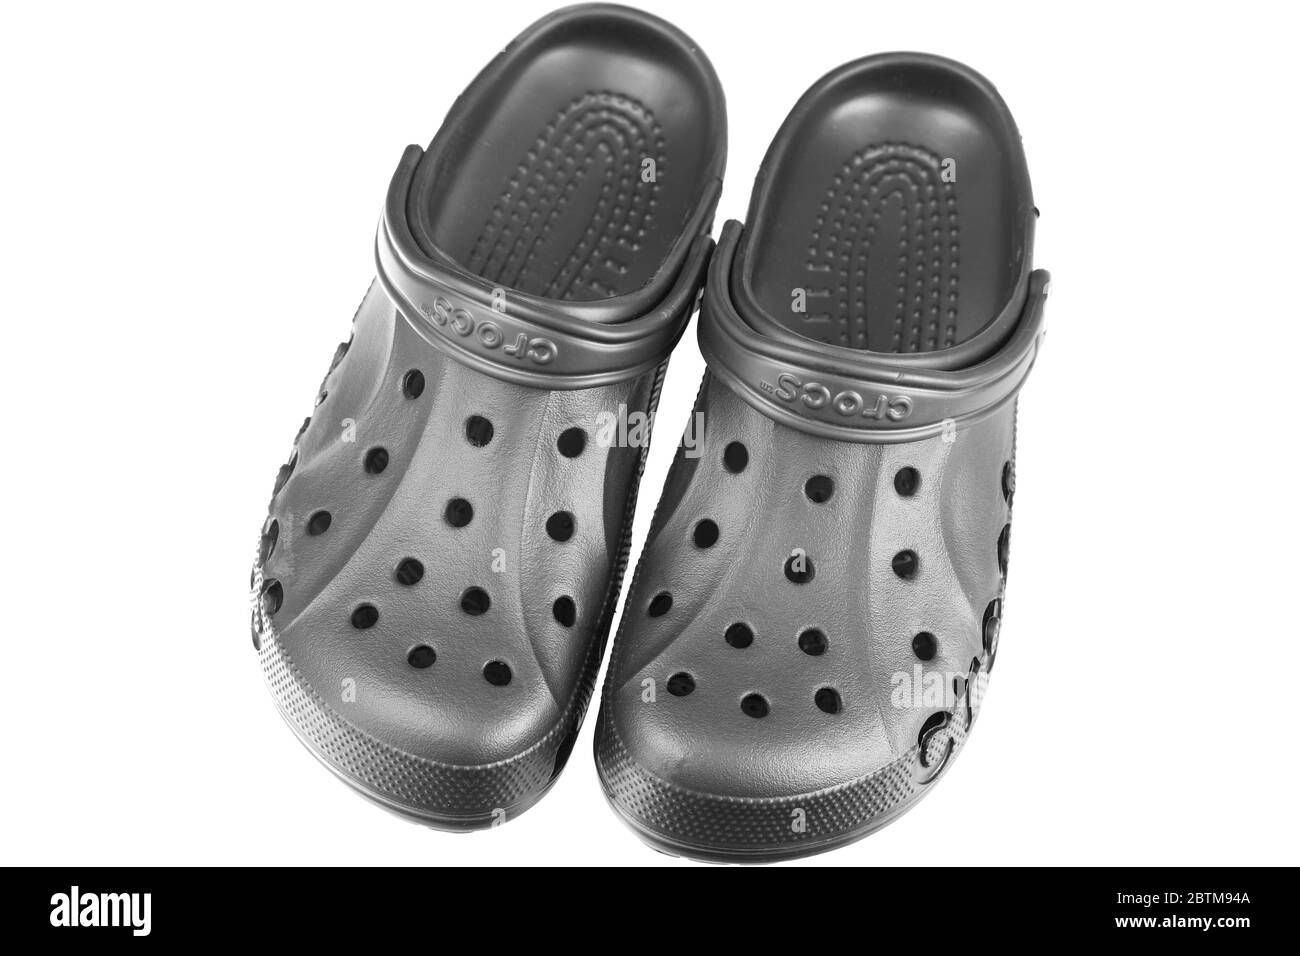 show me a picture of crocs shoes